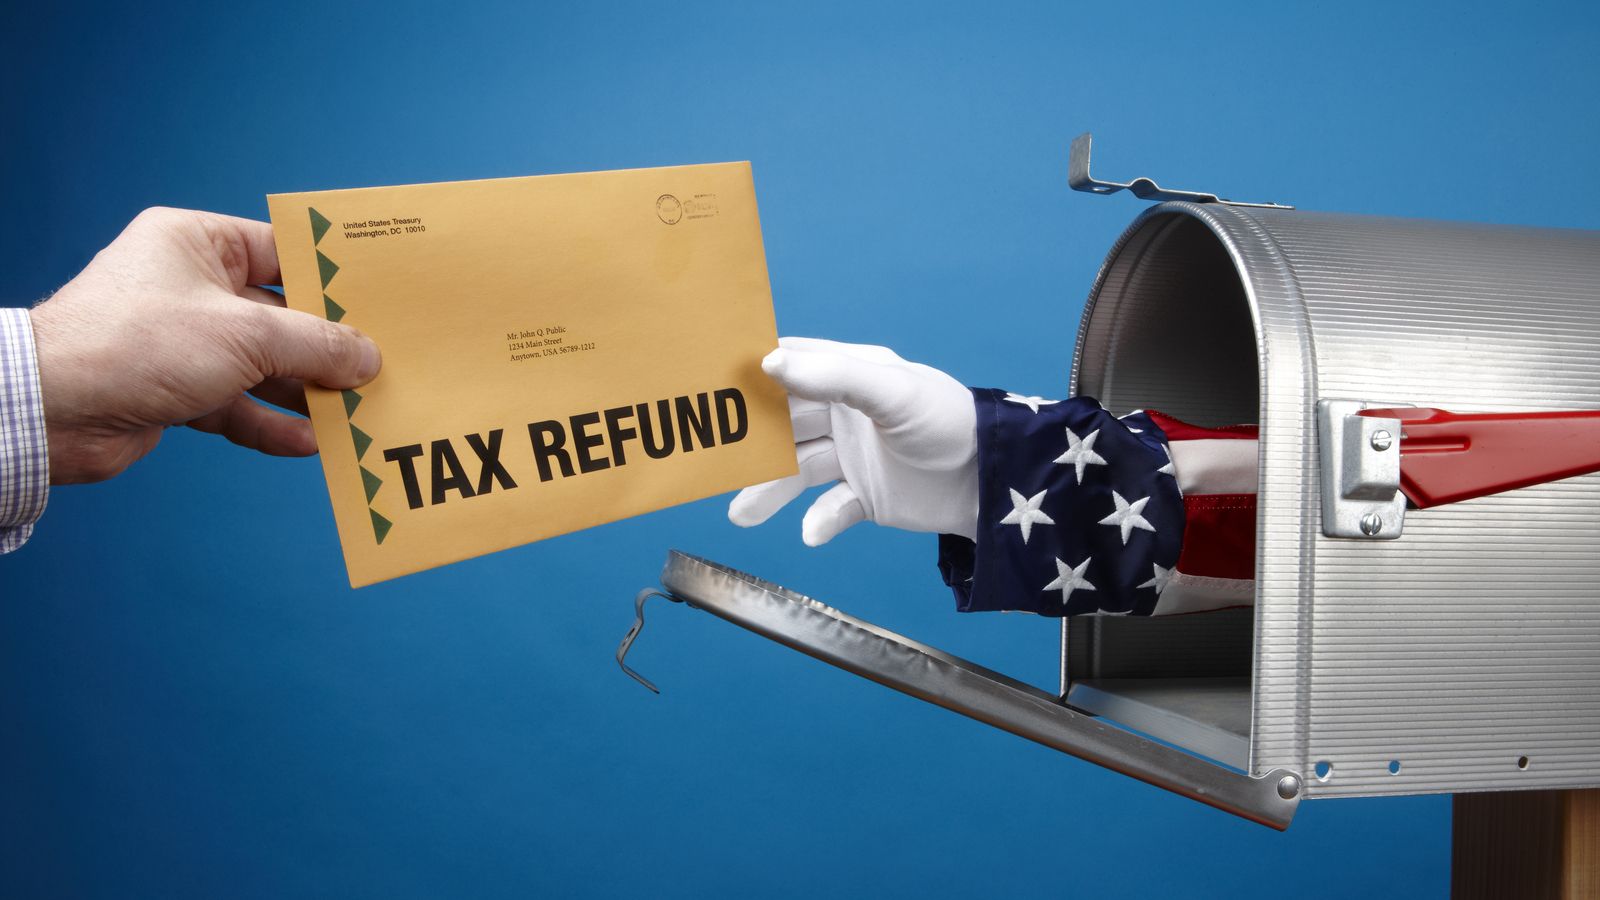 irs-tax-refund-2020-so-where-s-my-tax-refund-investorplace